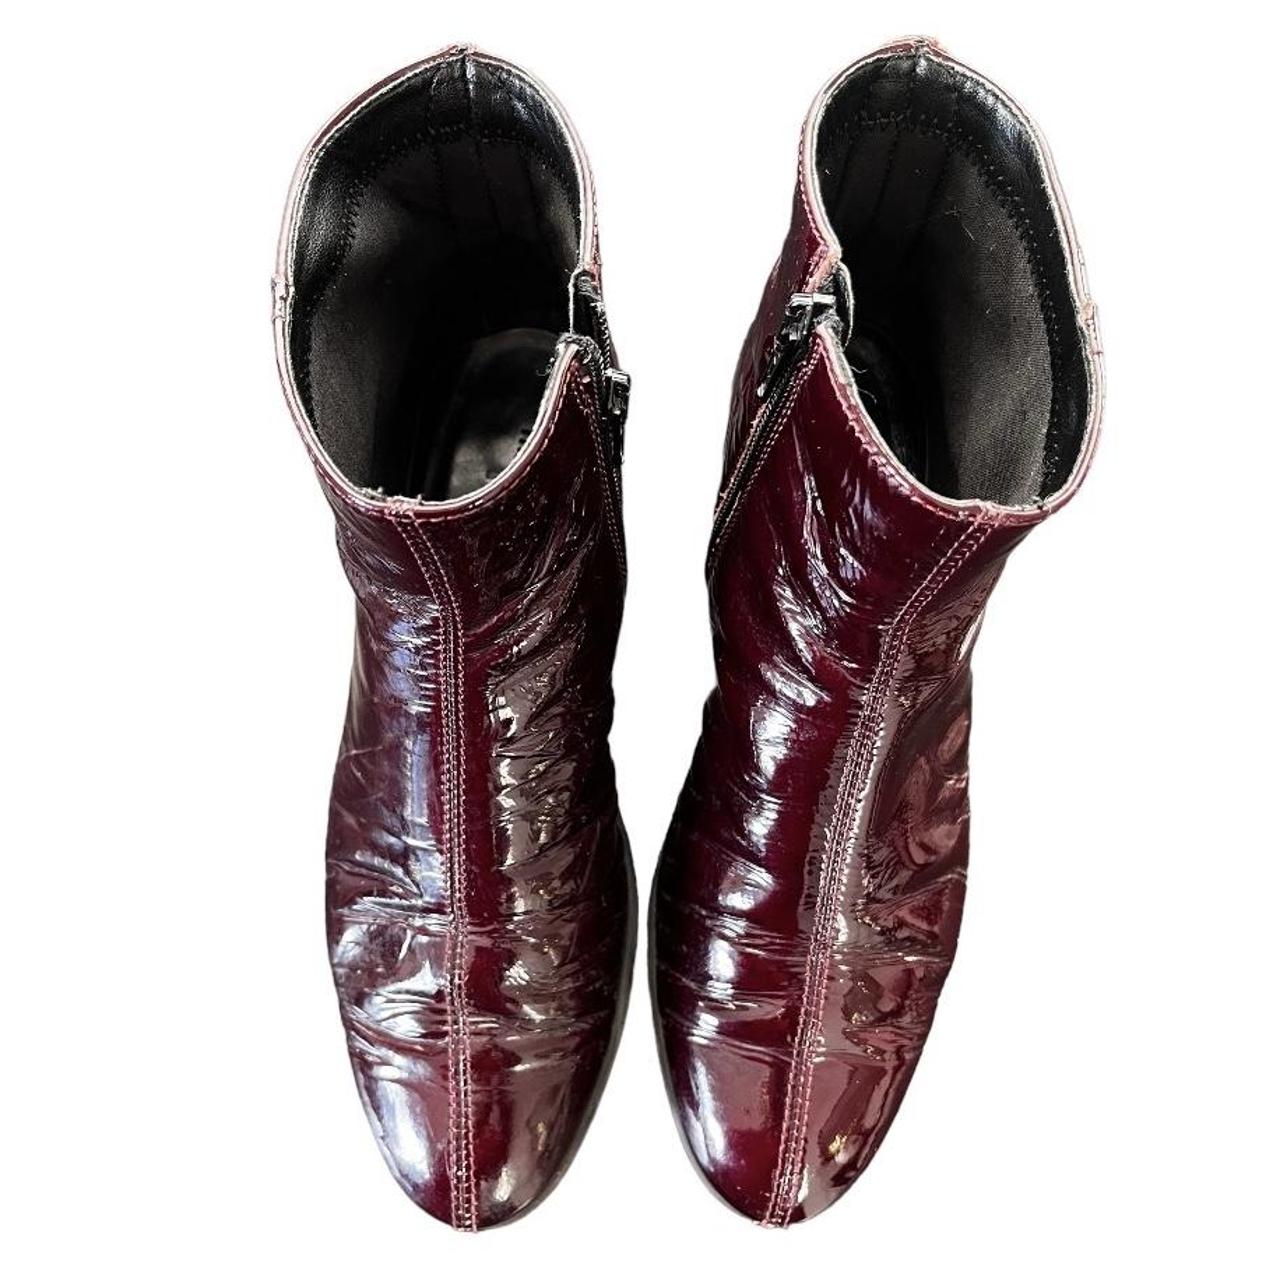 The FLEXX Patent Leather Merlot  Women's Boots Size 6.5